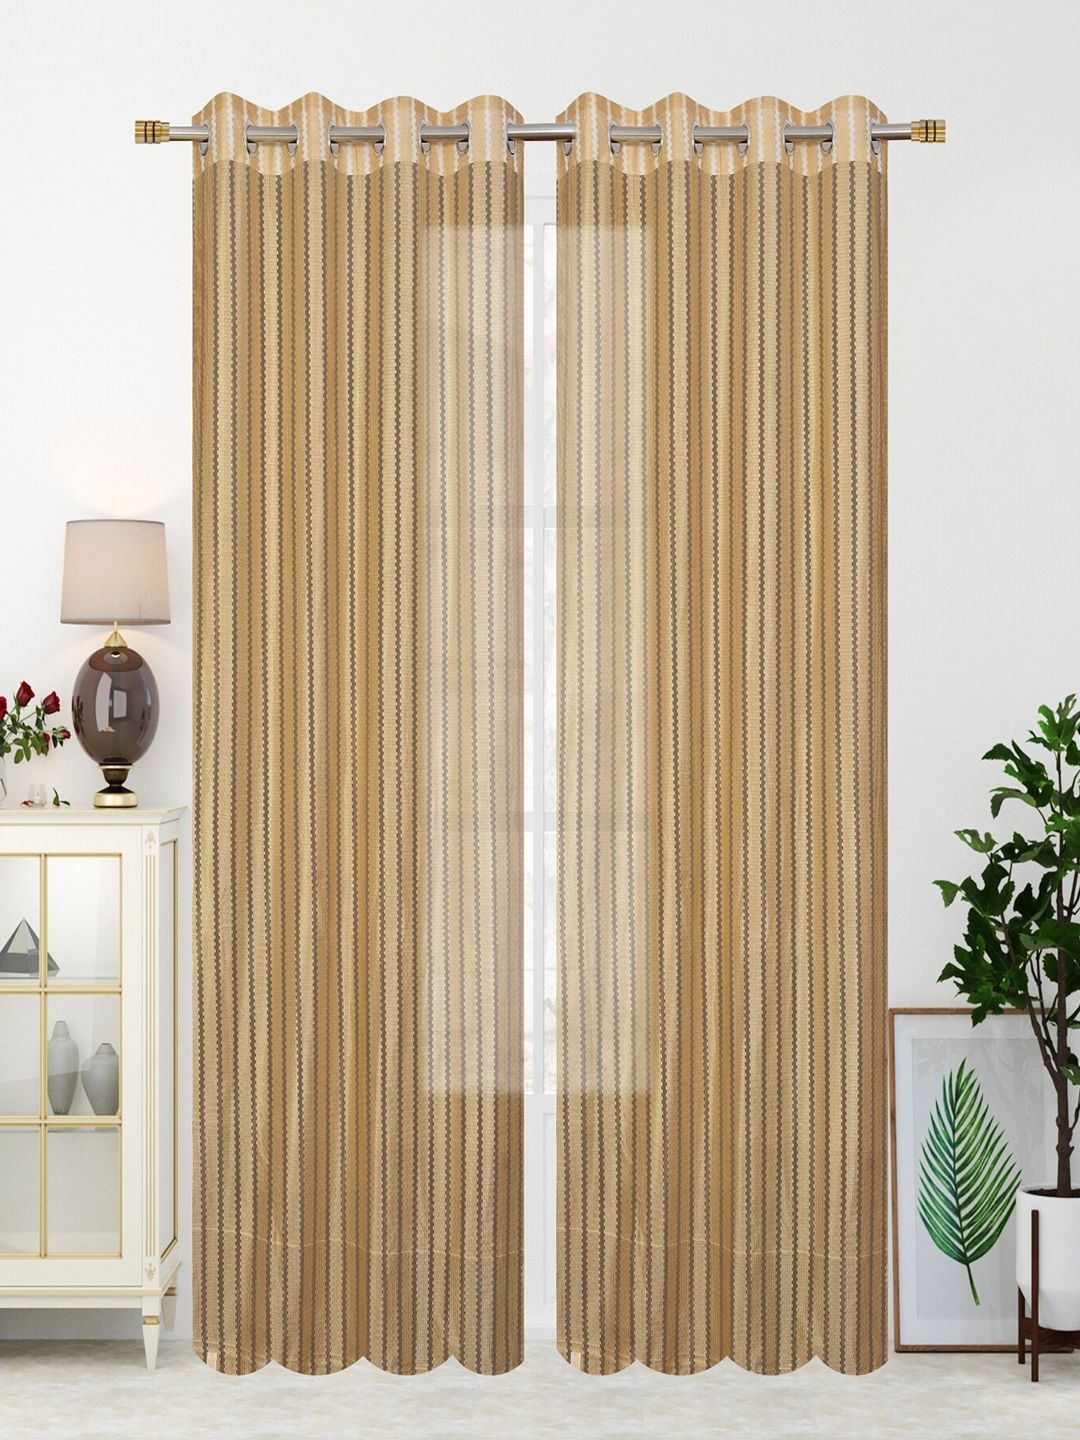 Homefab India Gold-Toned Set of 2 Sheer Door Curtain Price in India